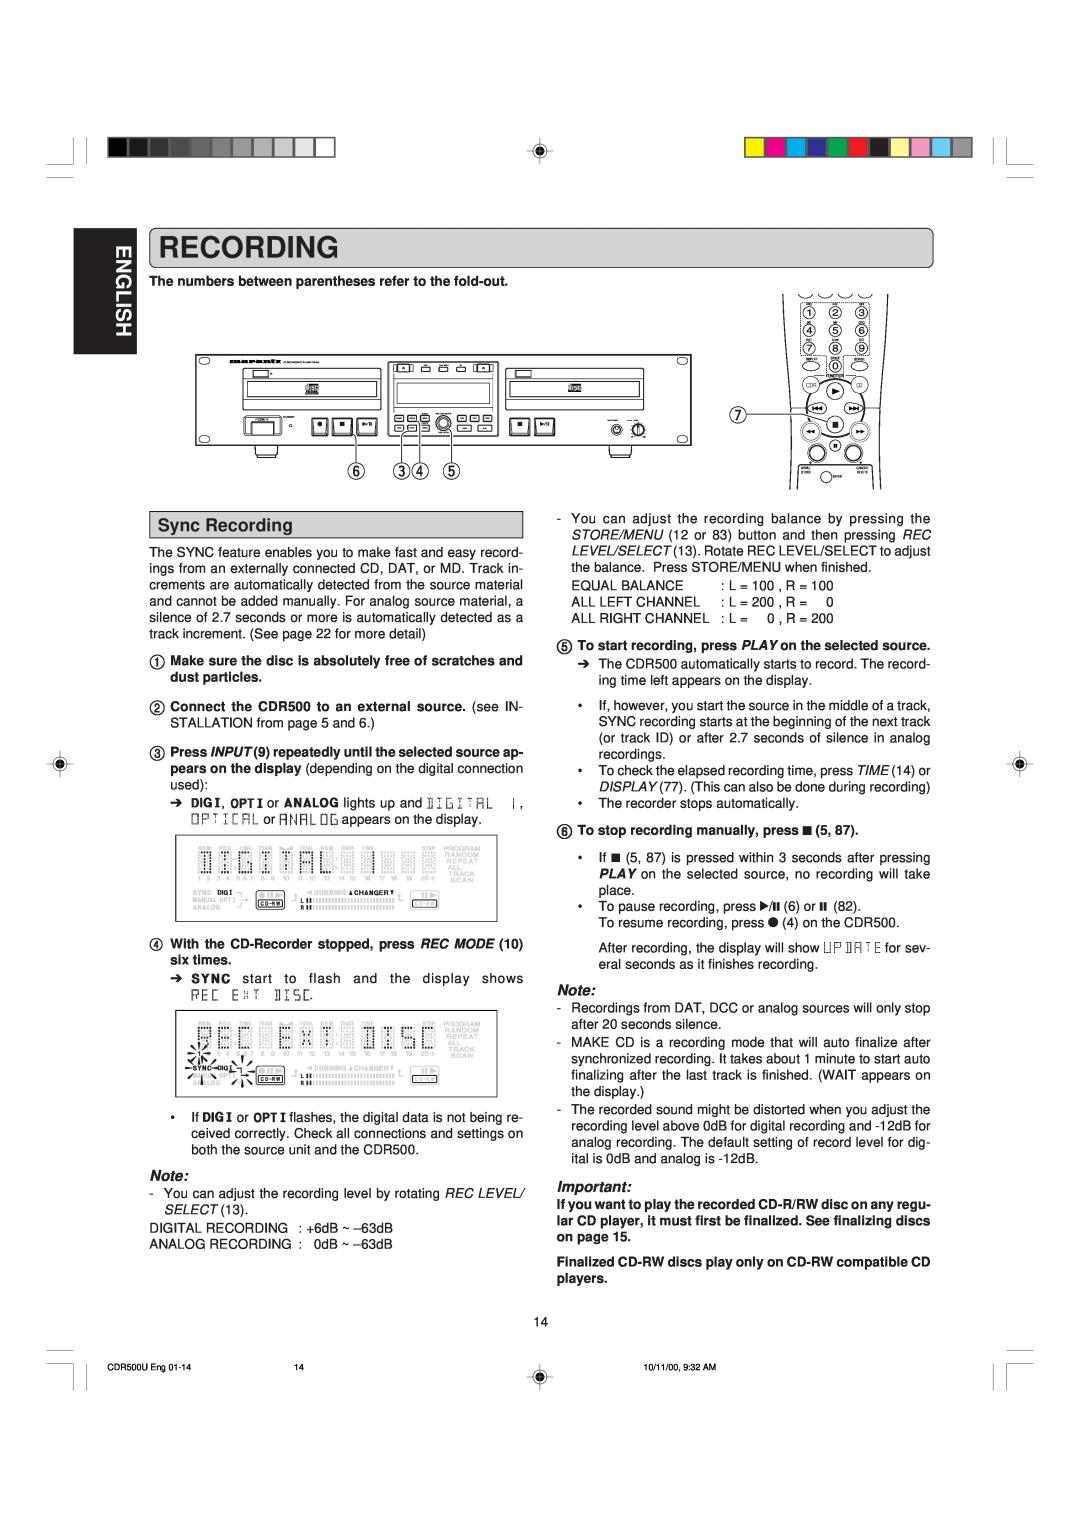 Marantz CDR500 manual y er t, Sync Recording, English, Select 